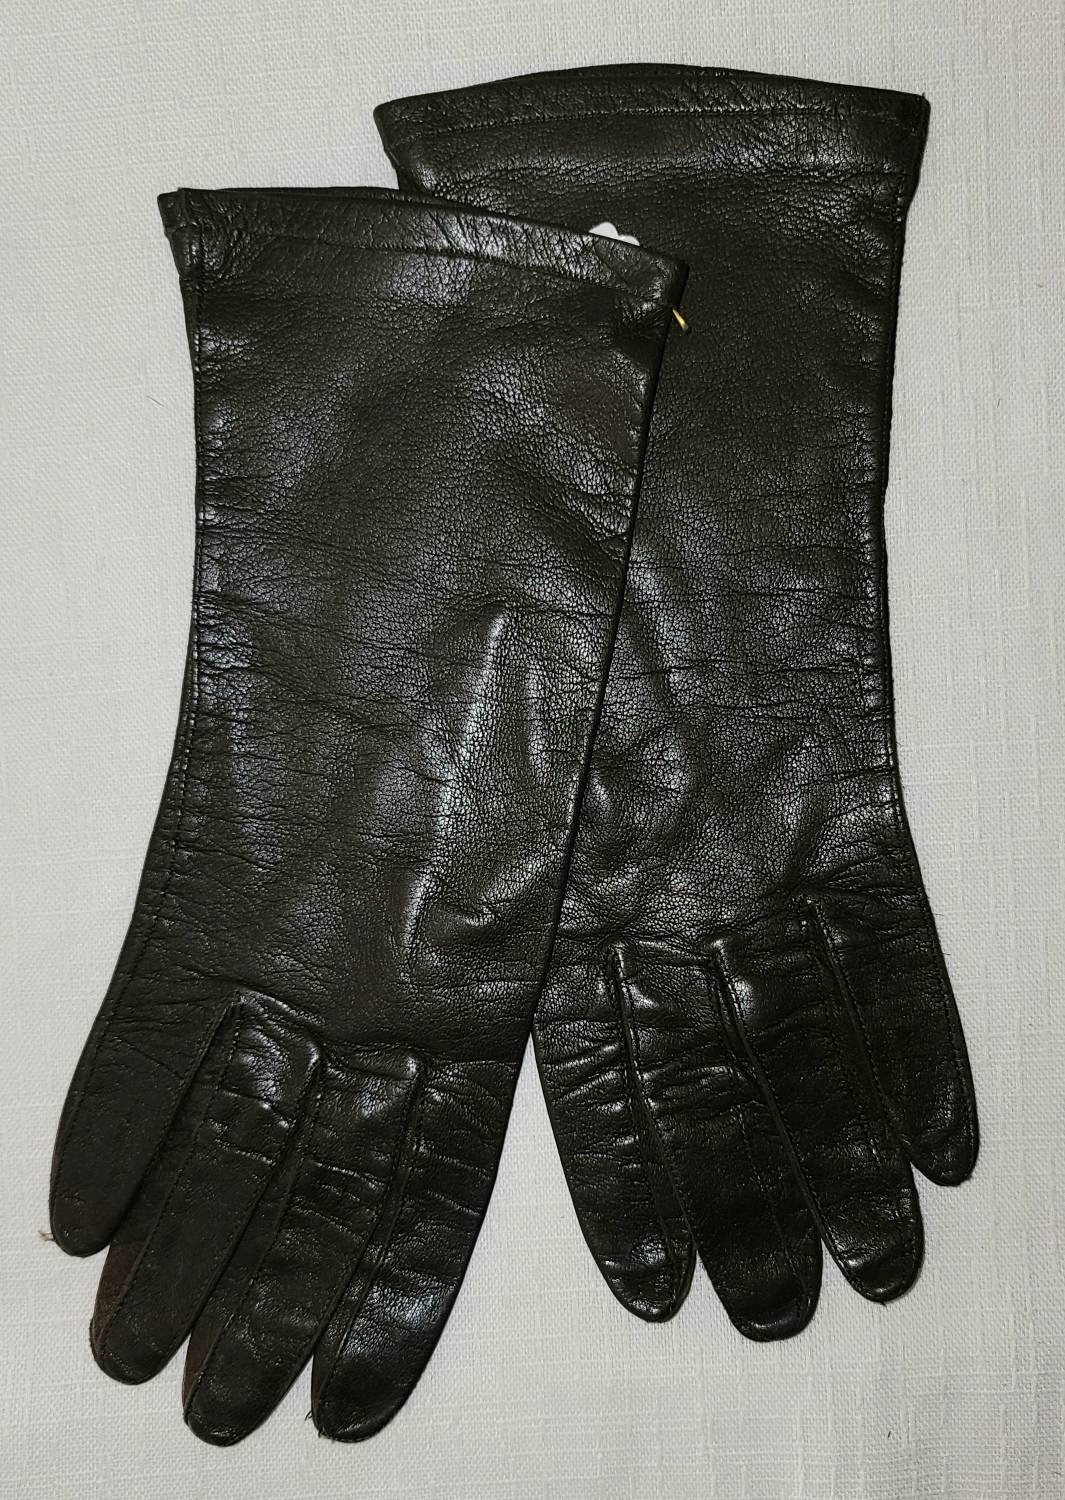 Vintage Leather Gloves 1950s 60s Thin Dark Brown Soft Black Midlength Leather Gloves Rockabilly Boho S M